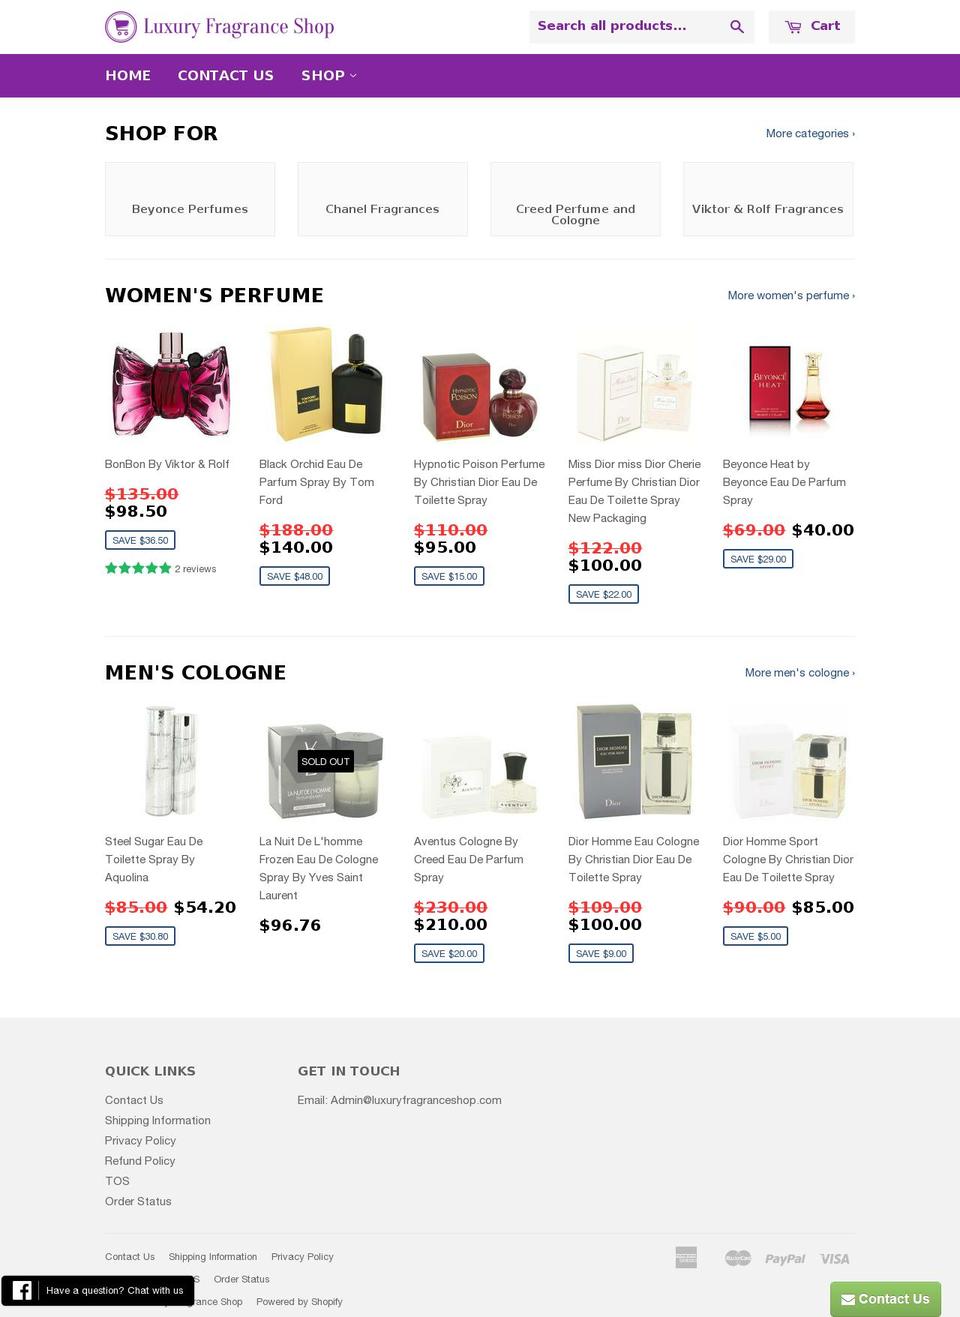 ThemeX Shopify theme site example luxuryfragranceshop.com